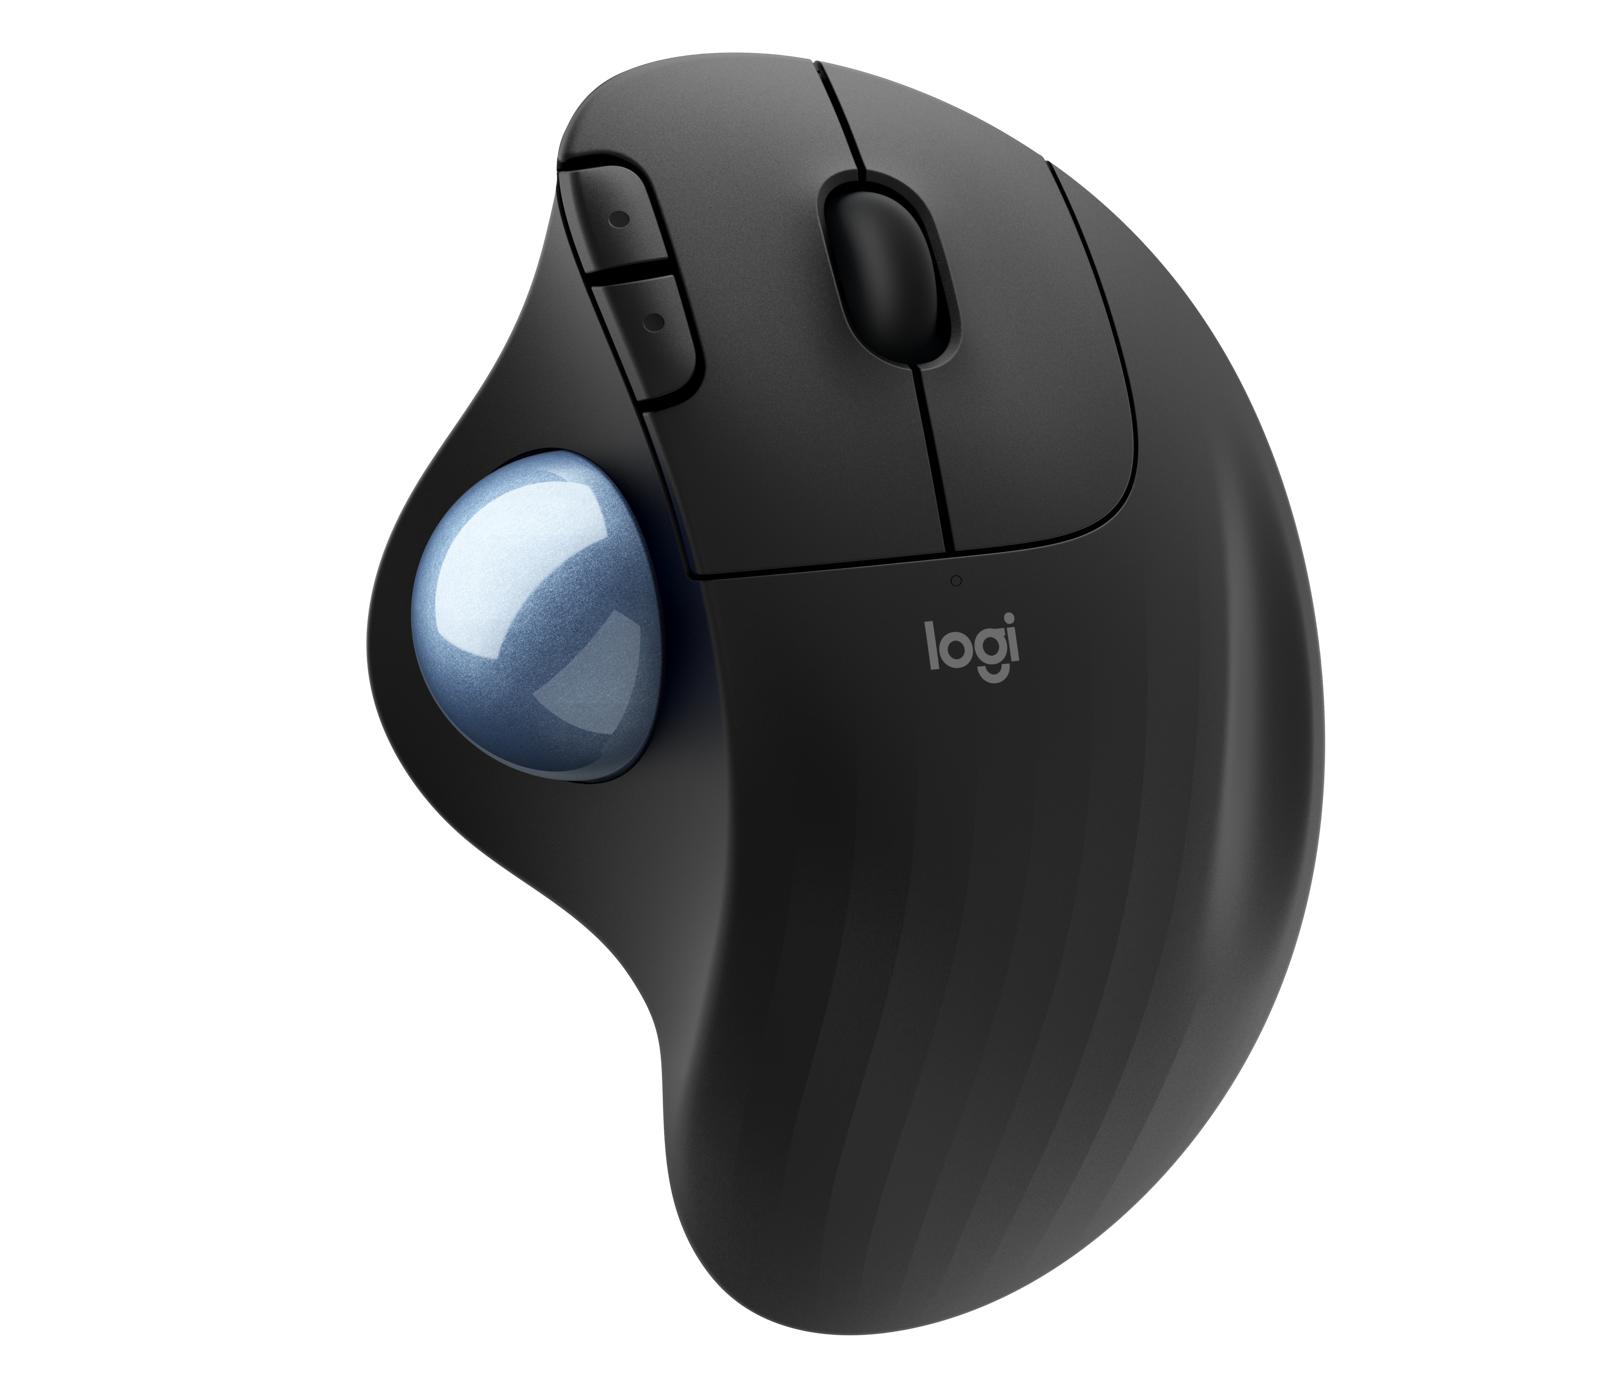 Logitech ERGO M575 Trackball with Tracking